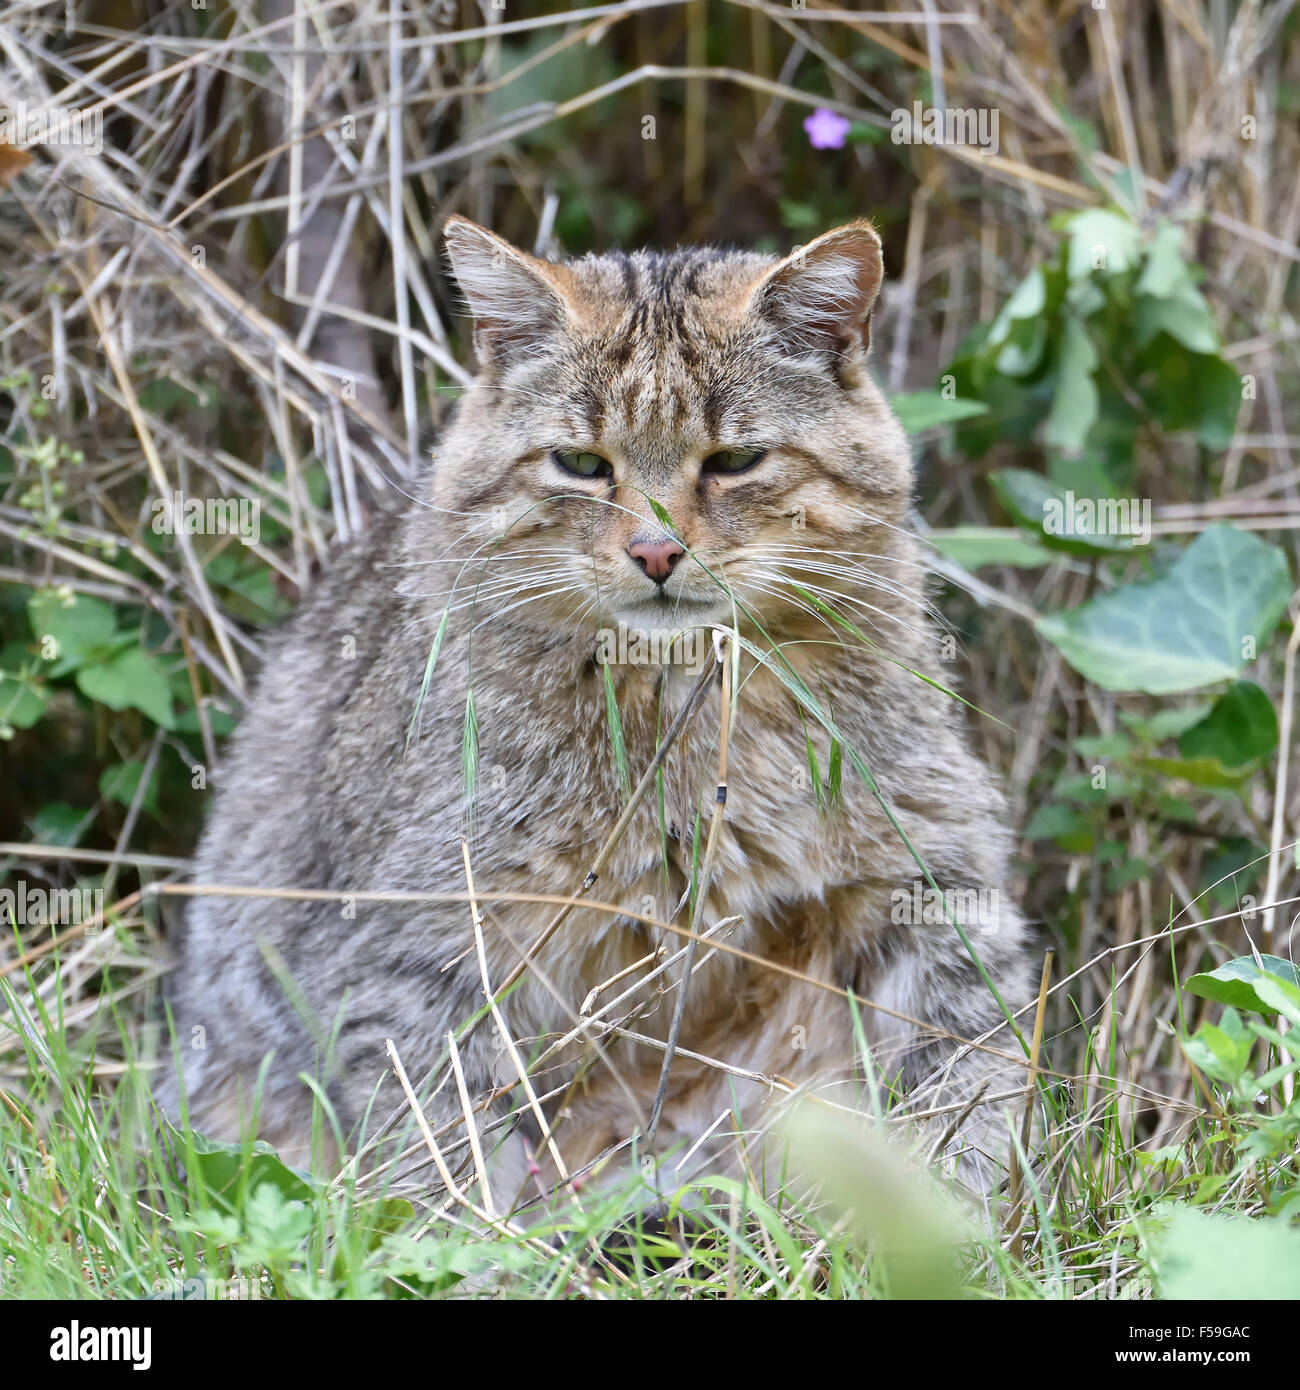 Wildcat;Felis silvestris. Stock Photo